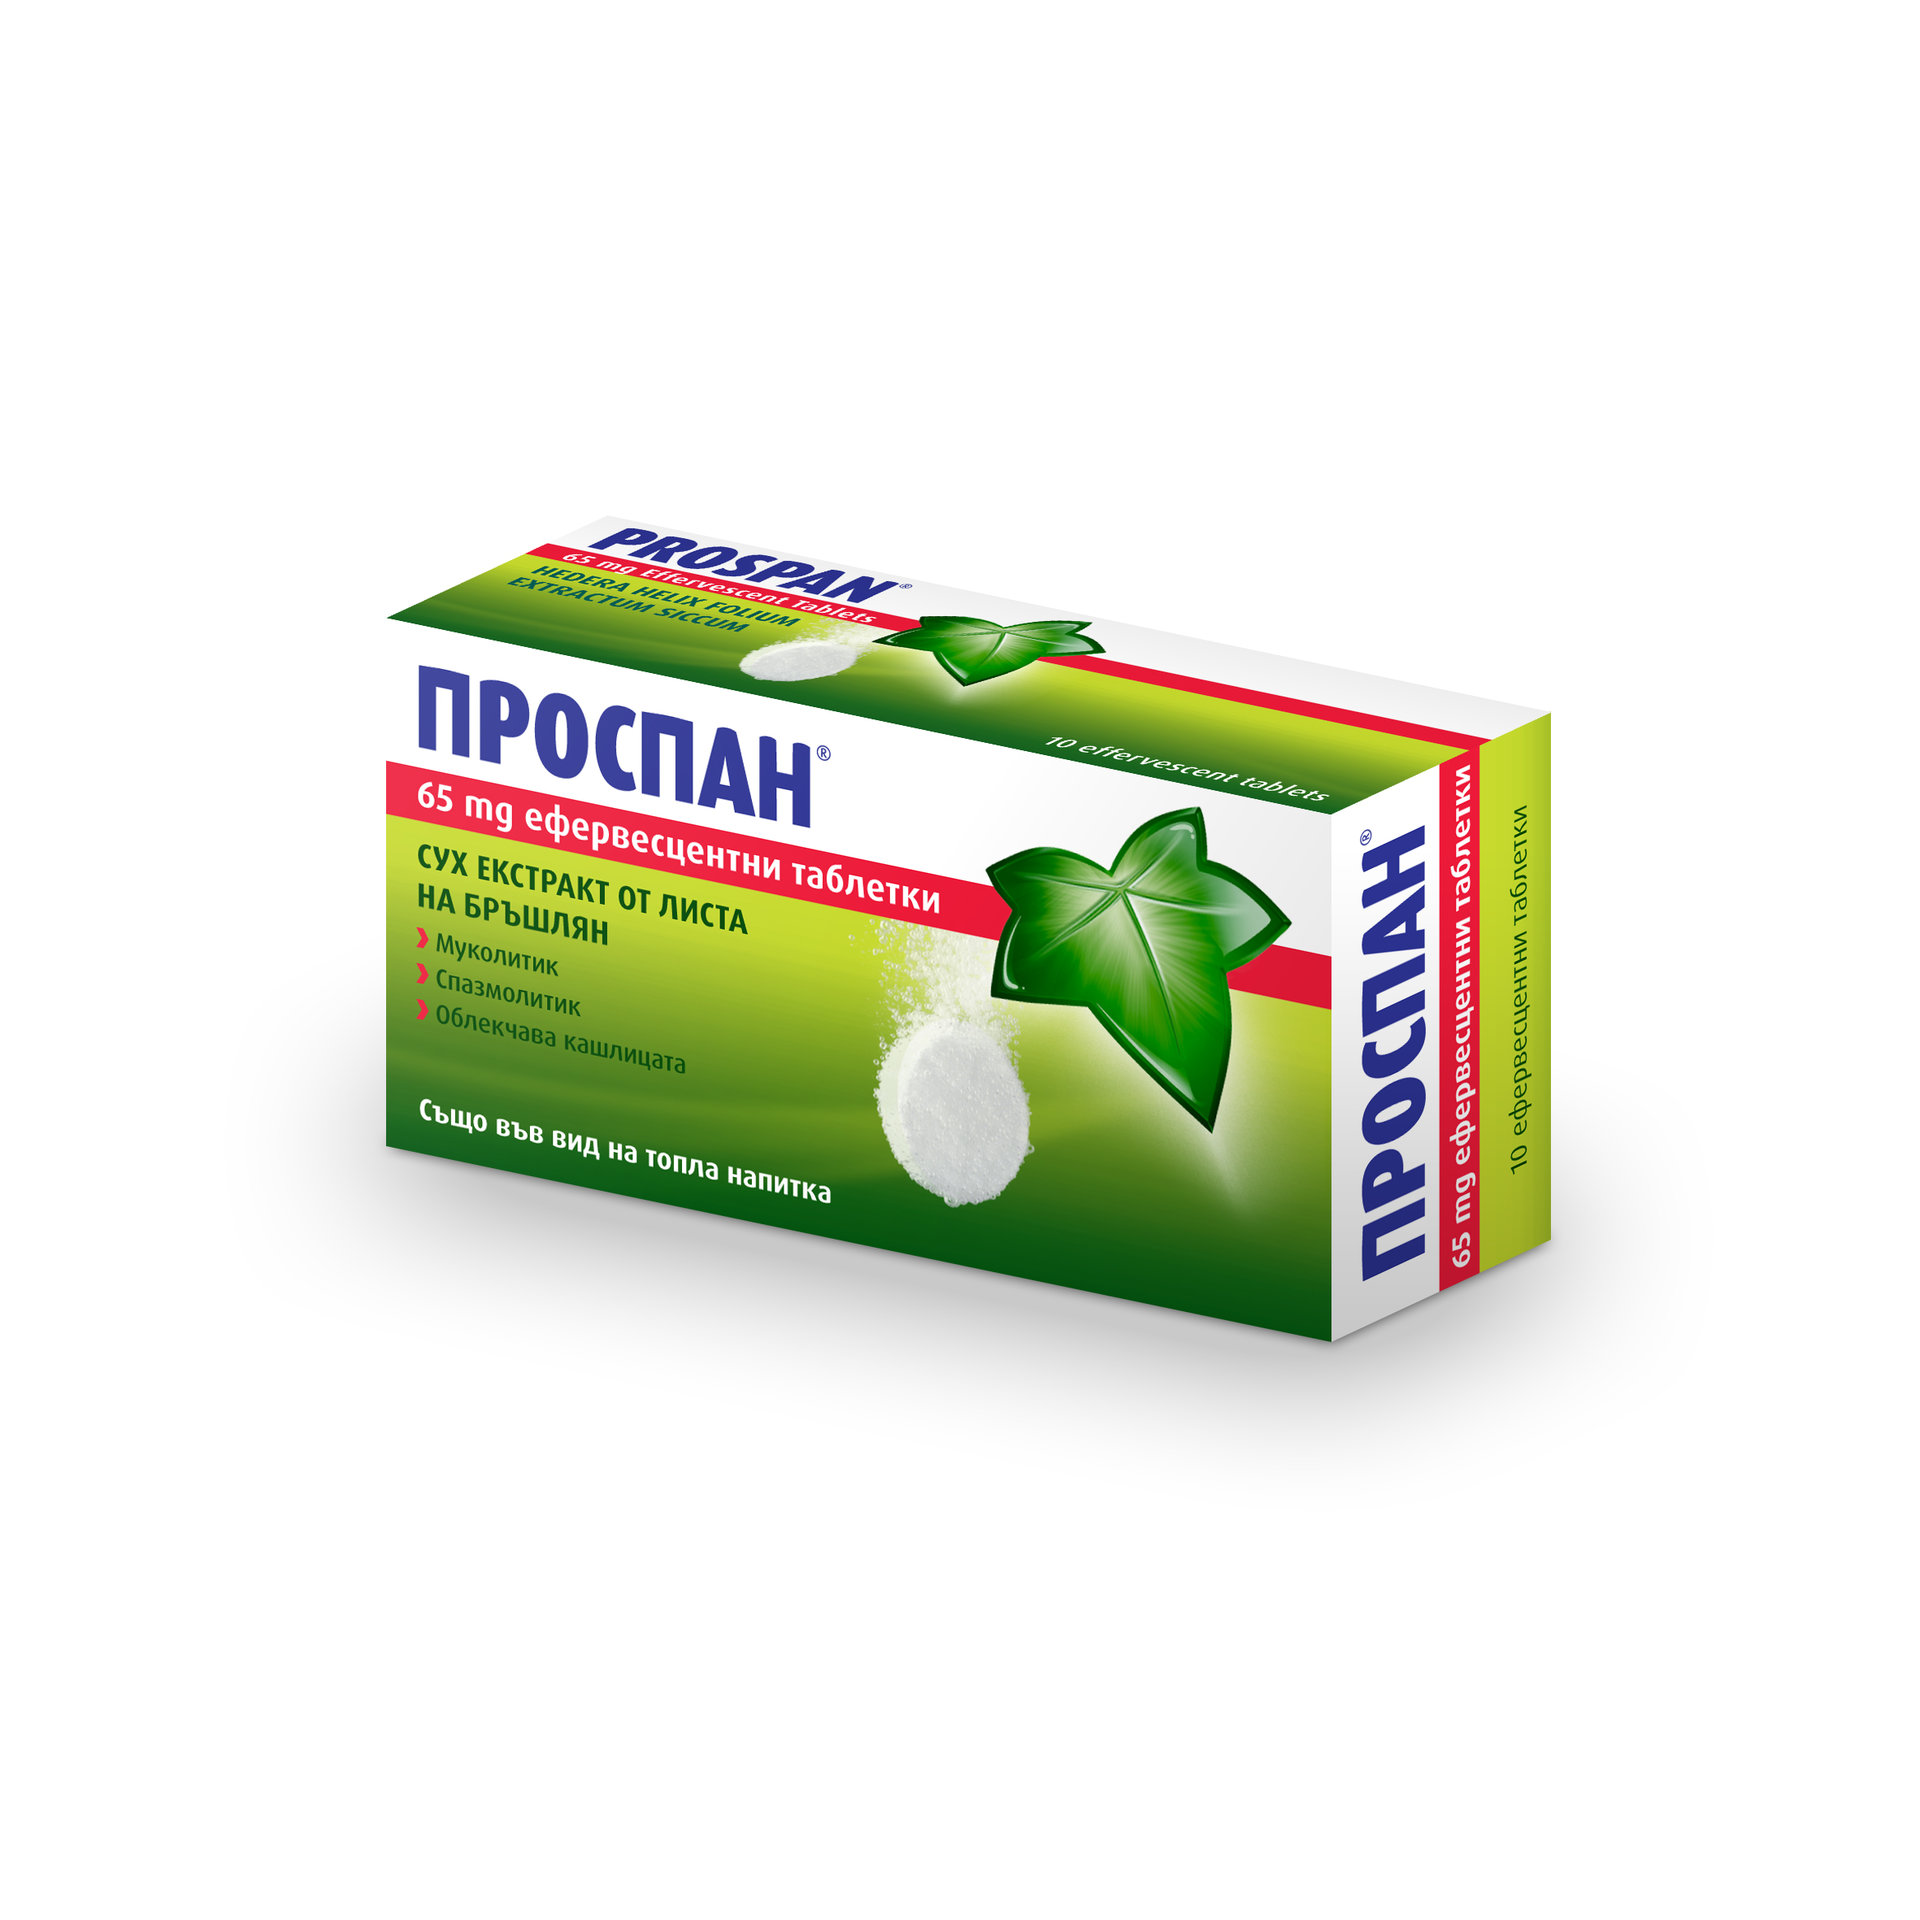 Проспан ефервесцентни таблетки (Prospan)